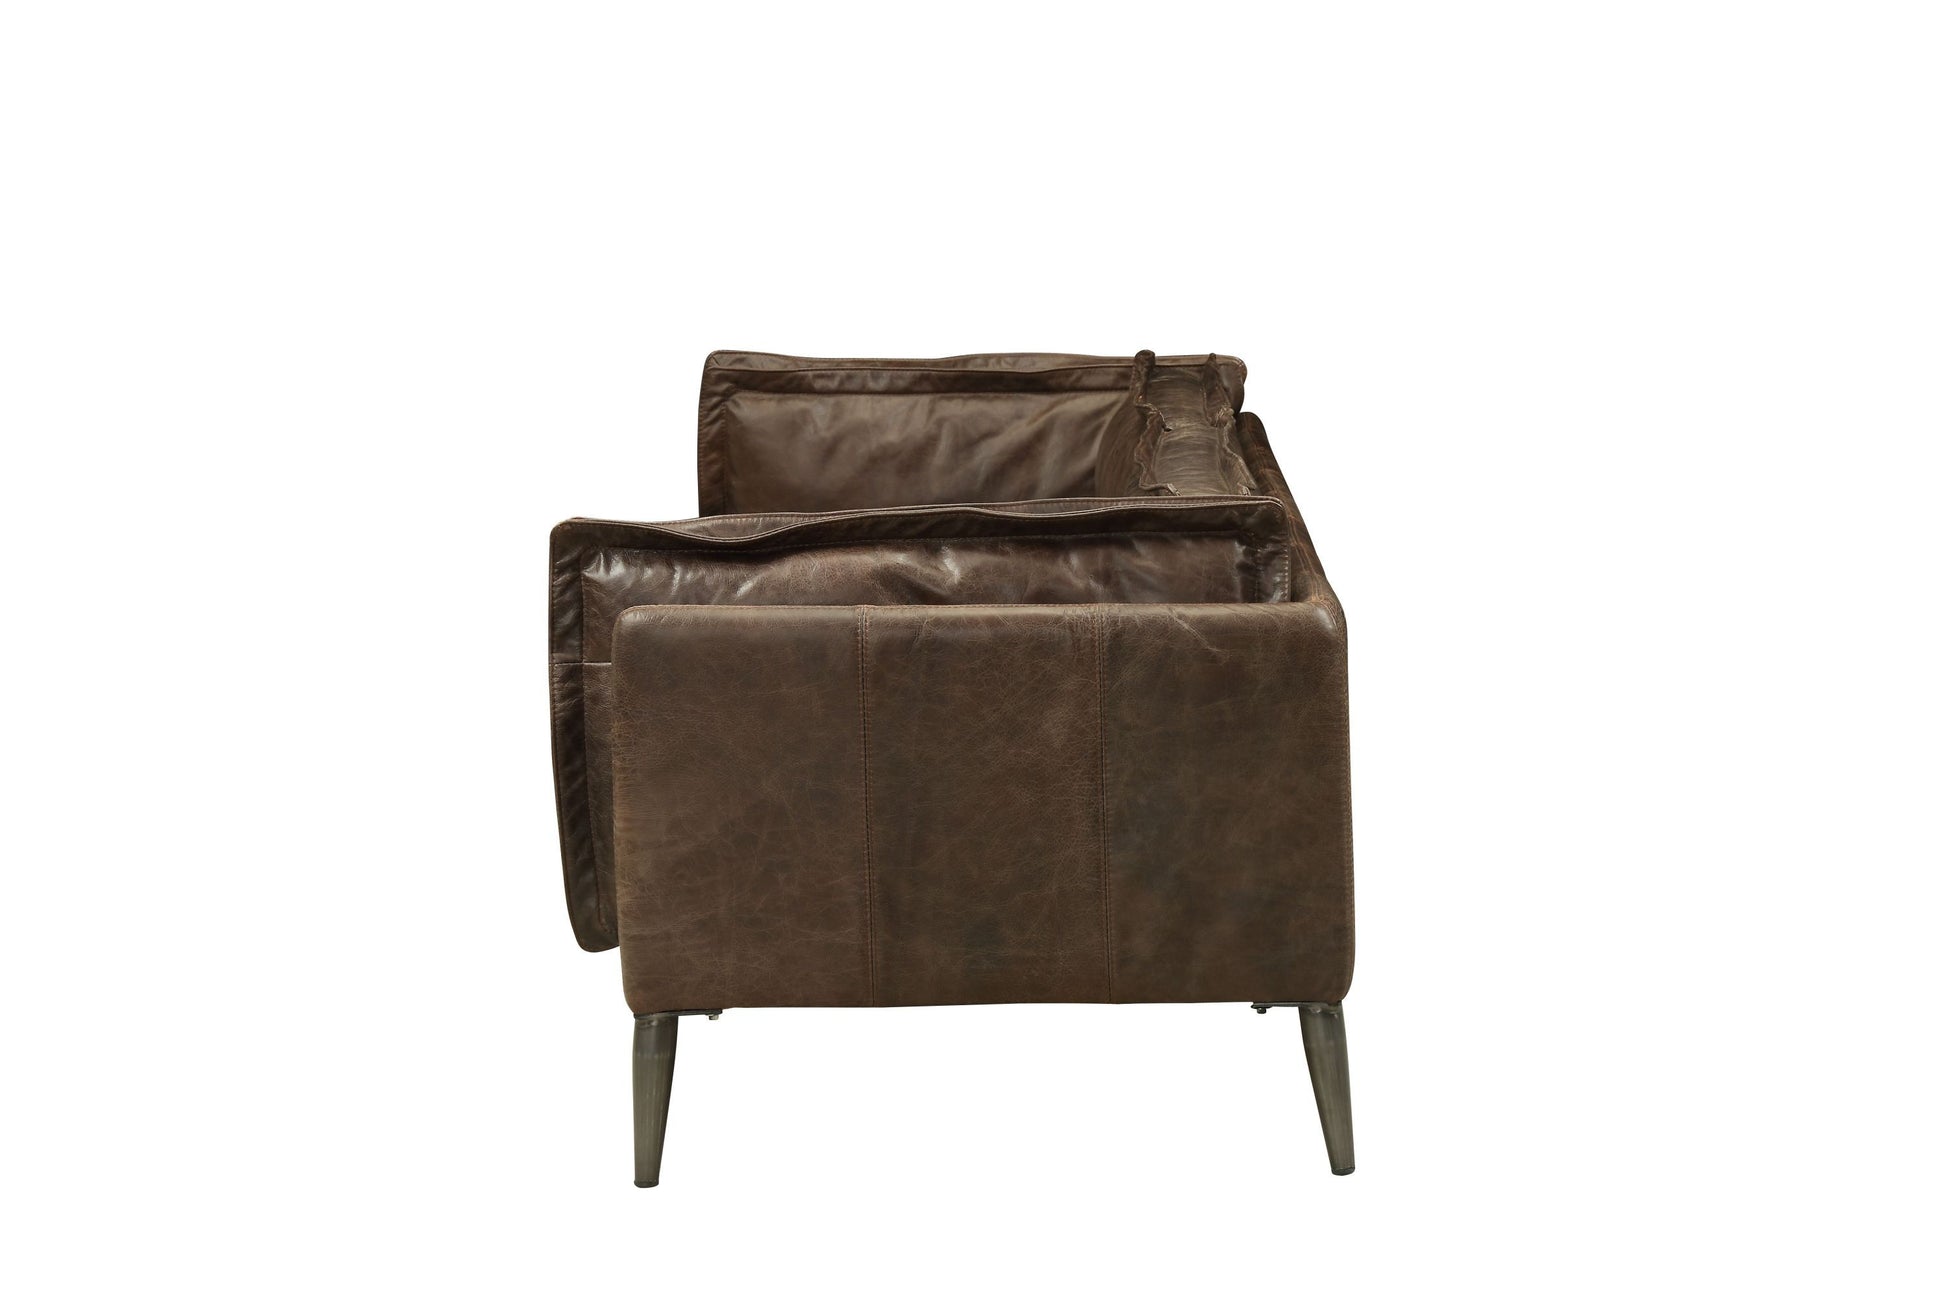 Porchester Sofa in Distressed Top Grain Chocolate Leather 94” - Revel Sofa 